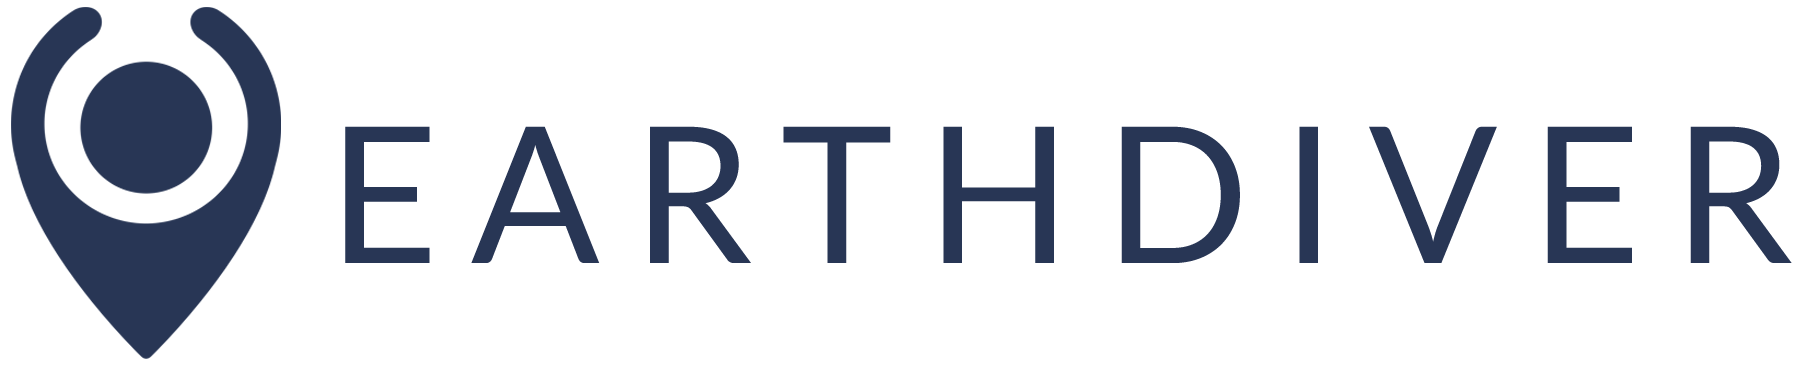 Earthdiver company logo